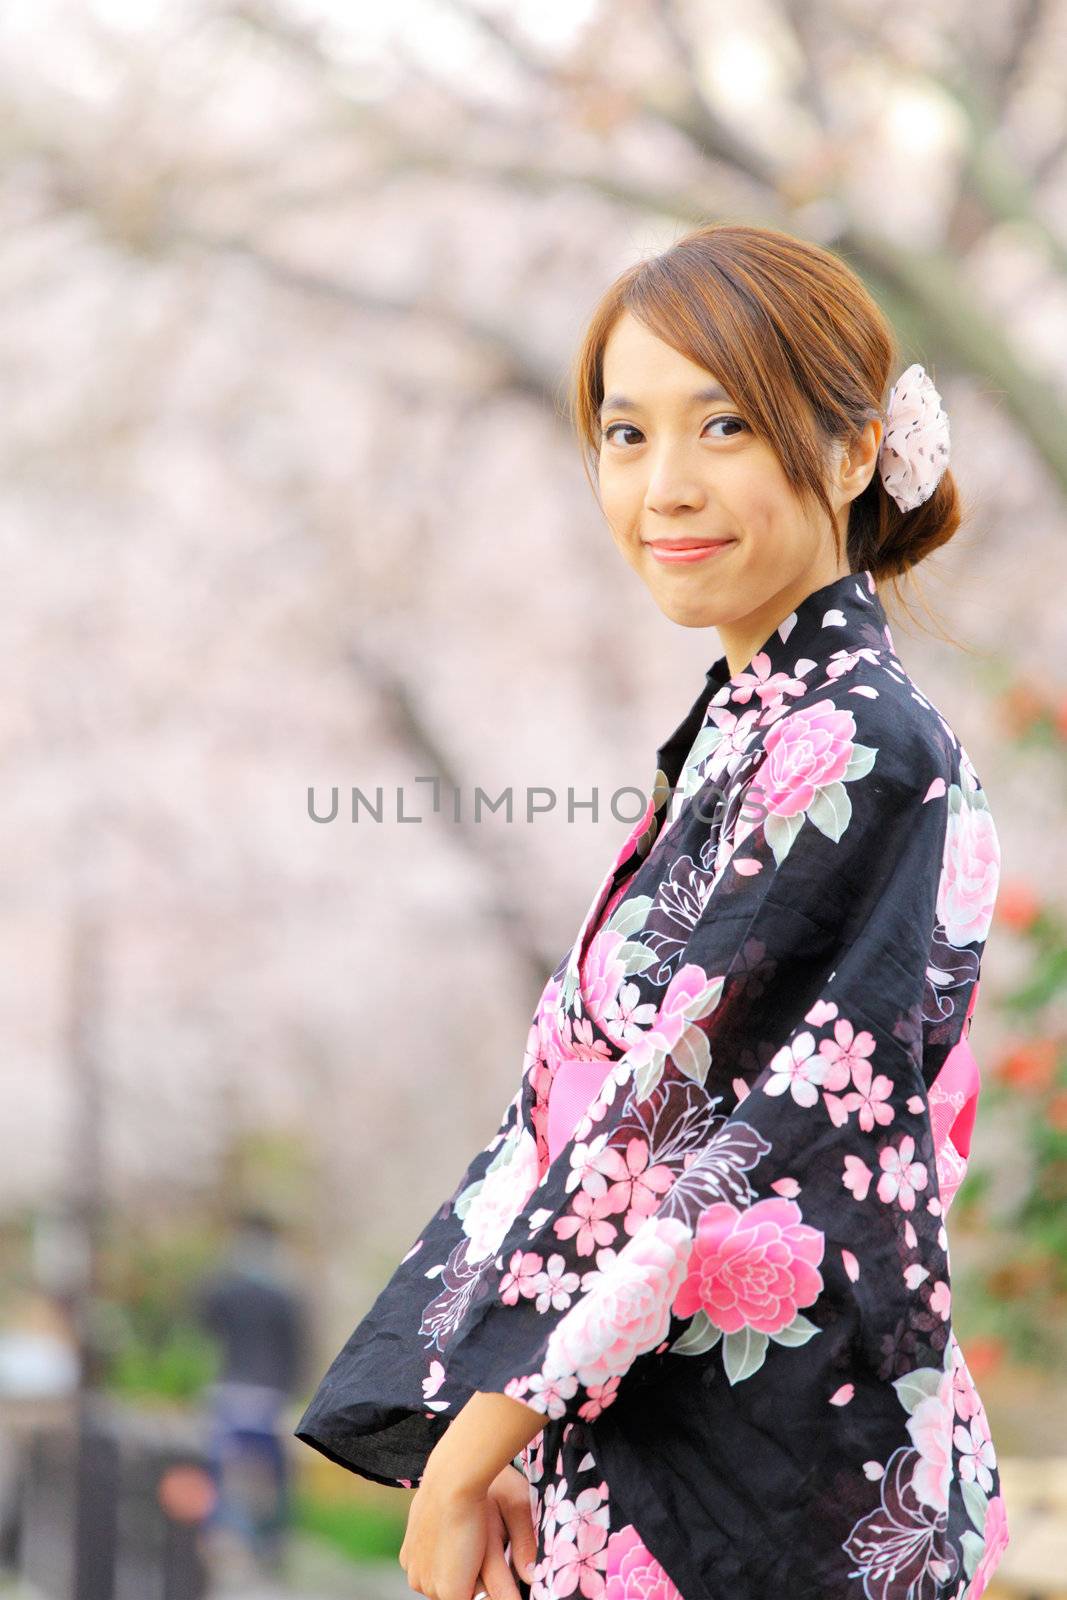 young girl in japan kimino dress